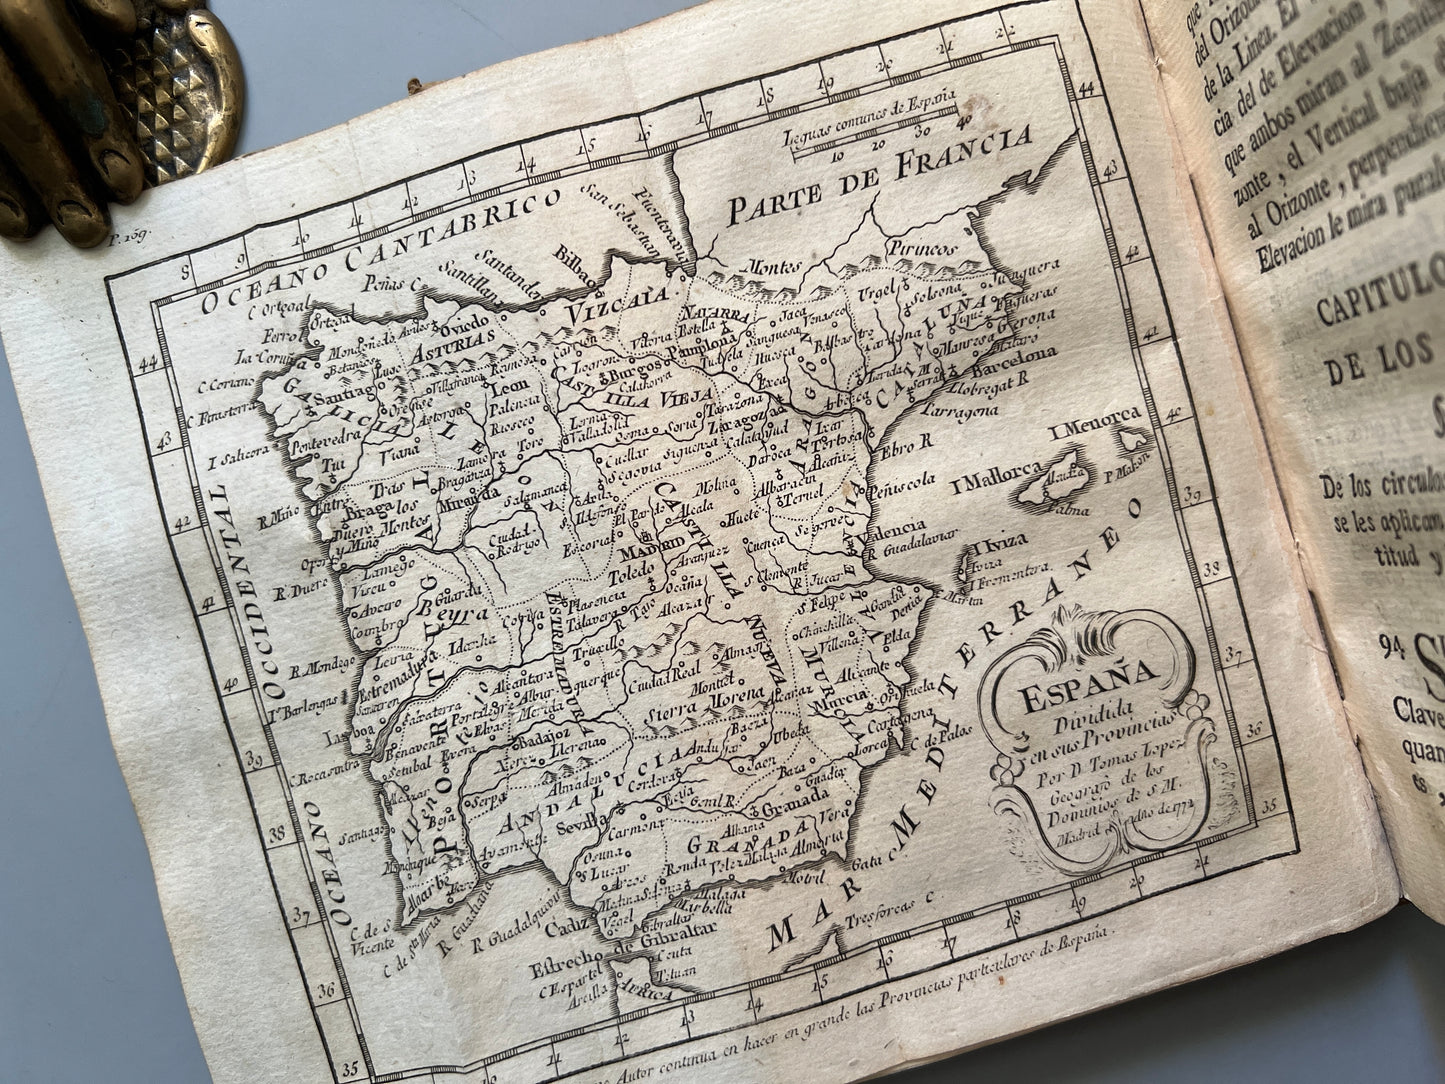 Clave geográfica para aprender geografía, Henrique Florez - D. Joachin de Ibarra, 1771